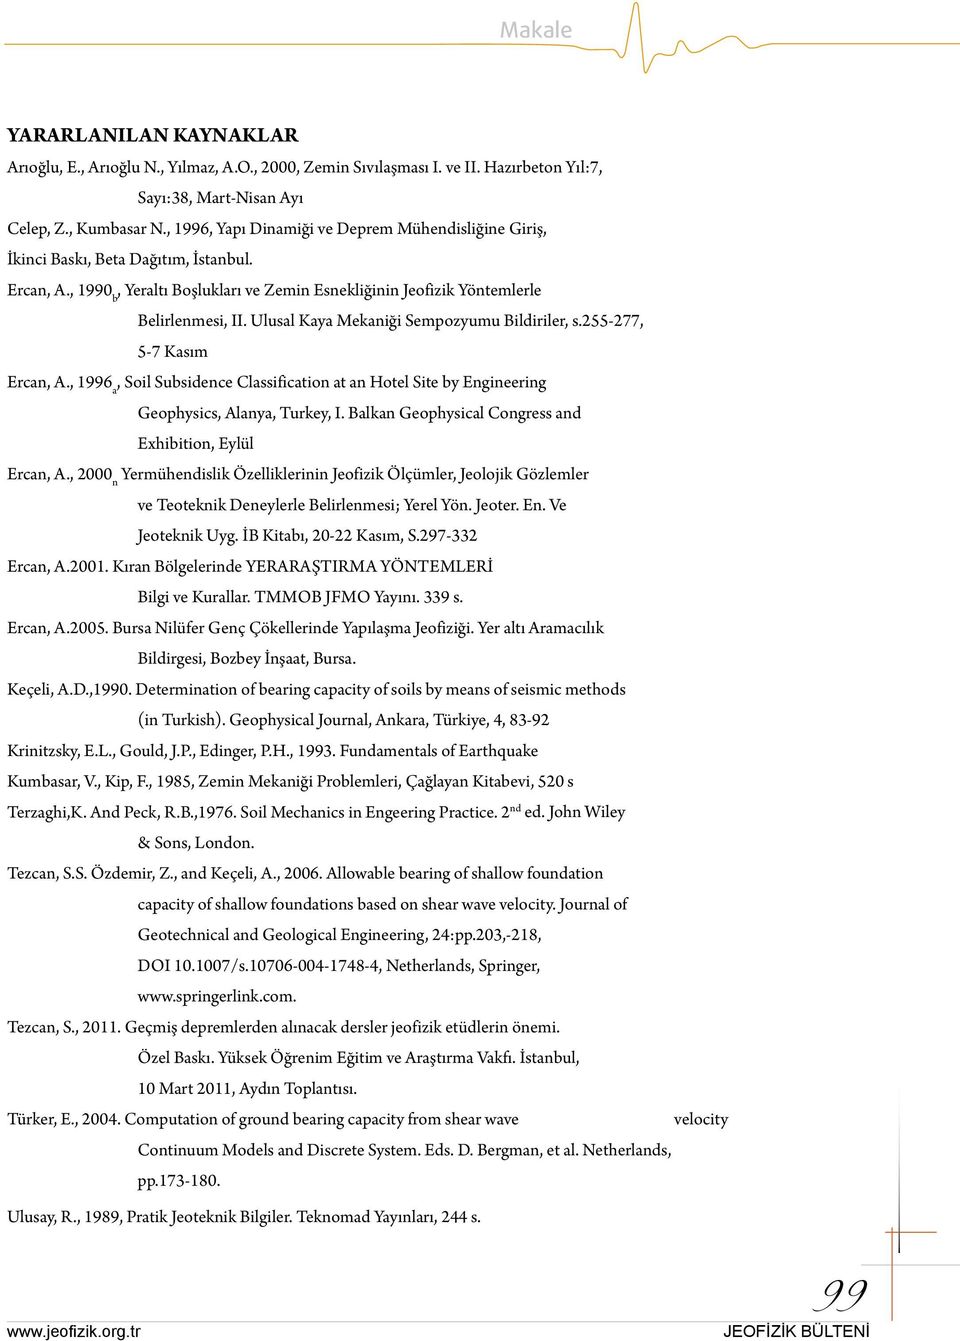 Ulusal Kaya Mekaniği Sempozyumu Bildiriler, s.55-77, 5-7 Kasım Ercan, A., 1996 a, Soil Subsidence Classification at an Hotel Site by Engineering Geophysics, Alanya, Turkey, I.